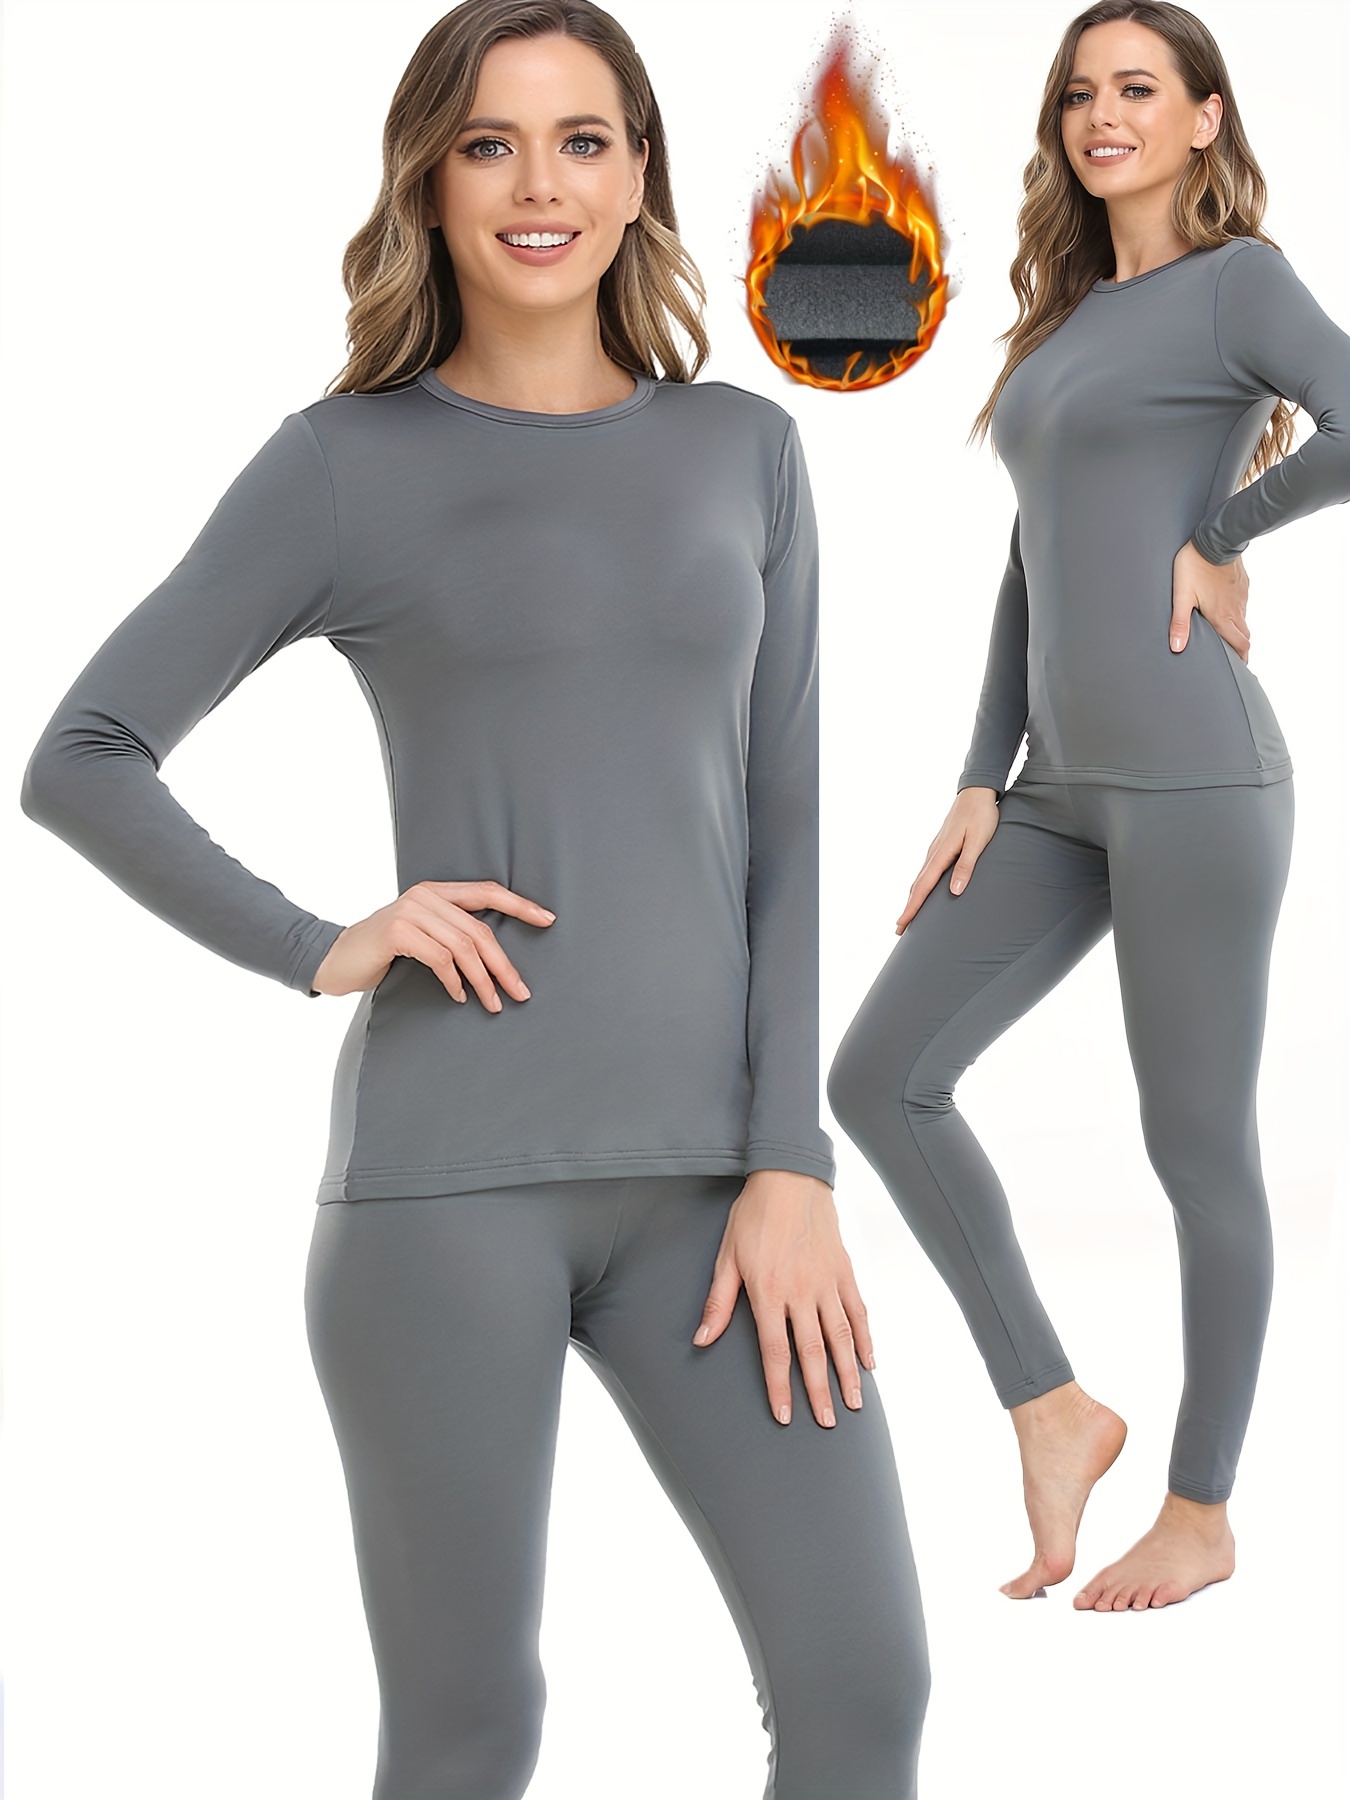 Women's seamless thermal underwear (top)